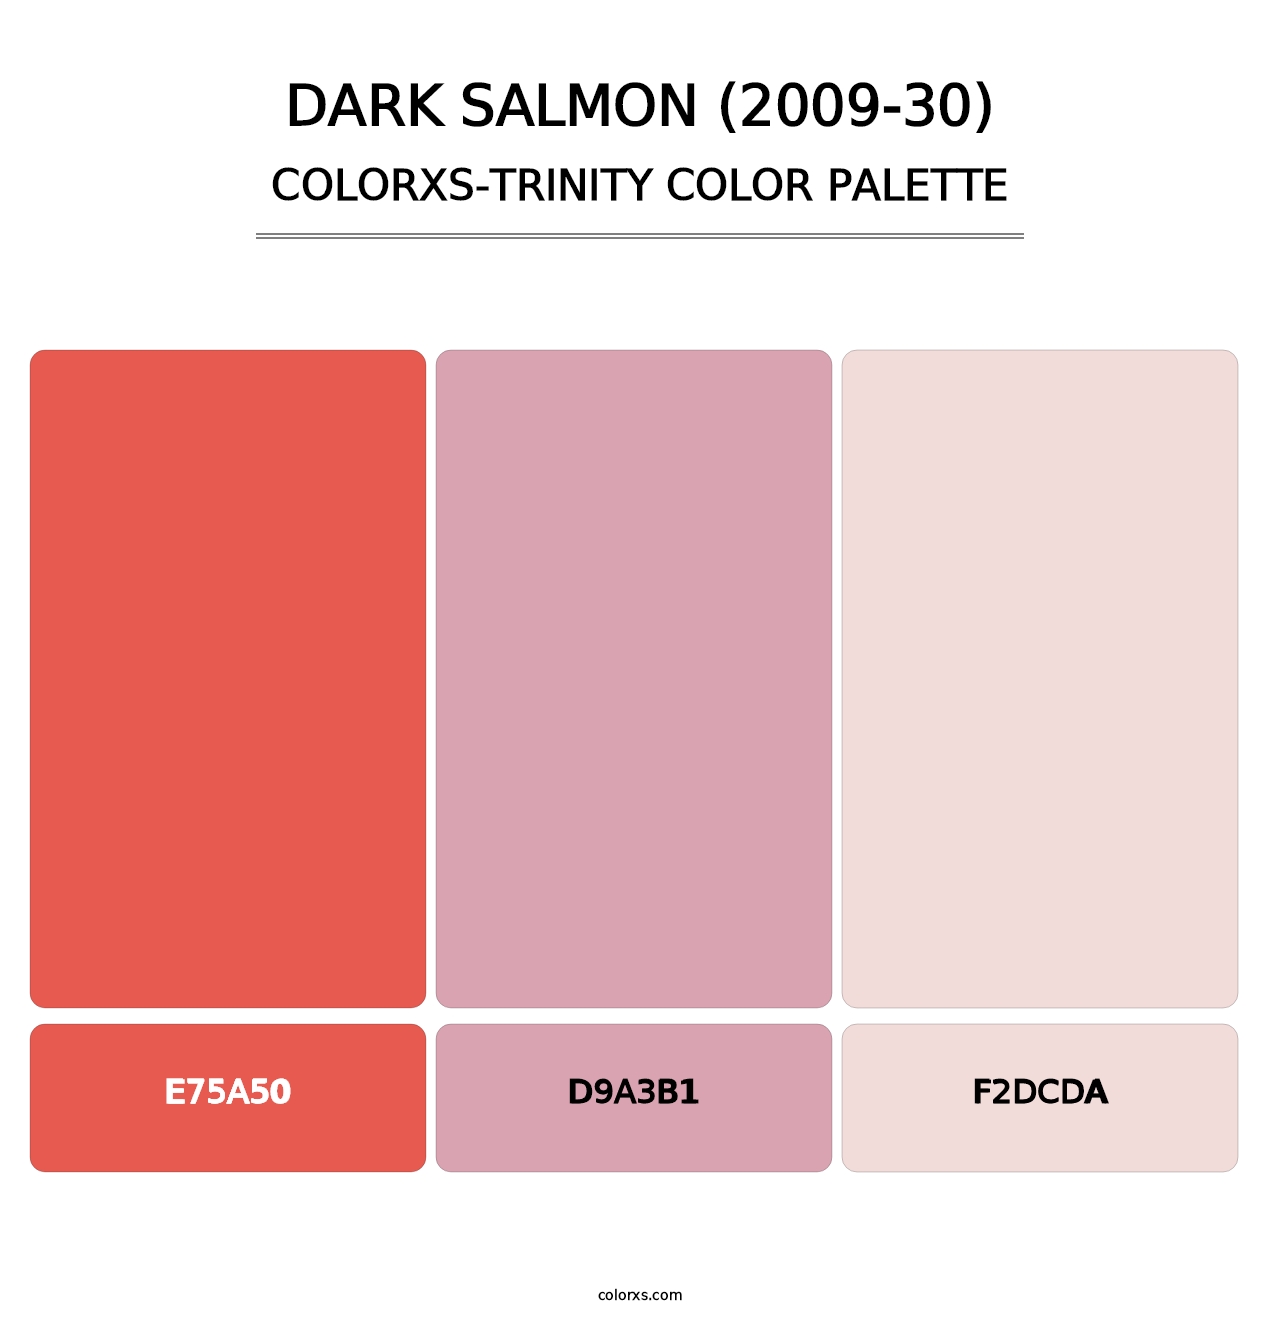 Dark Salmon (2009-30) - Colorxs Trinity Palette